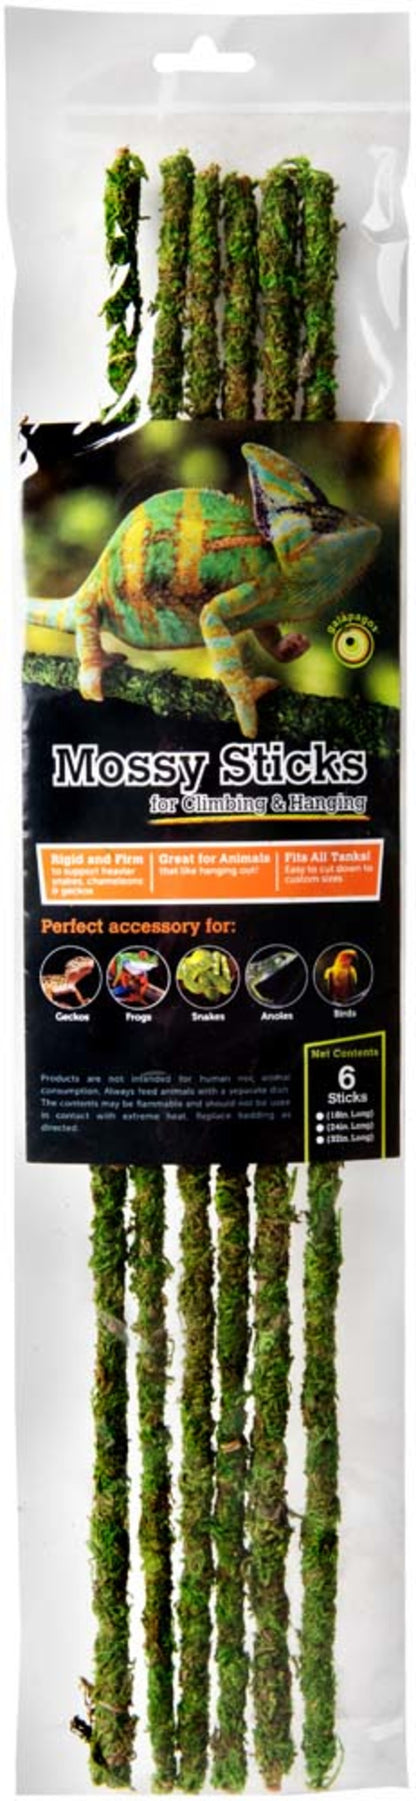 Galapagos Mossy Sticks